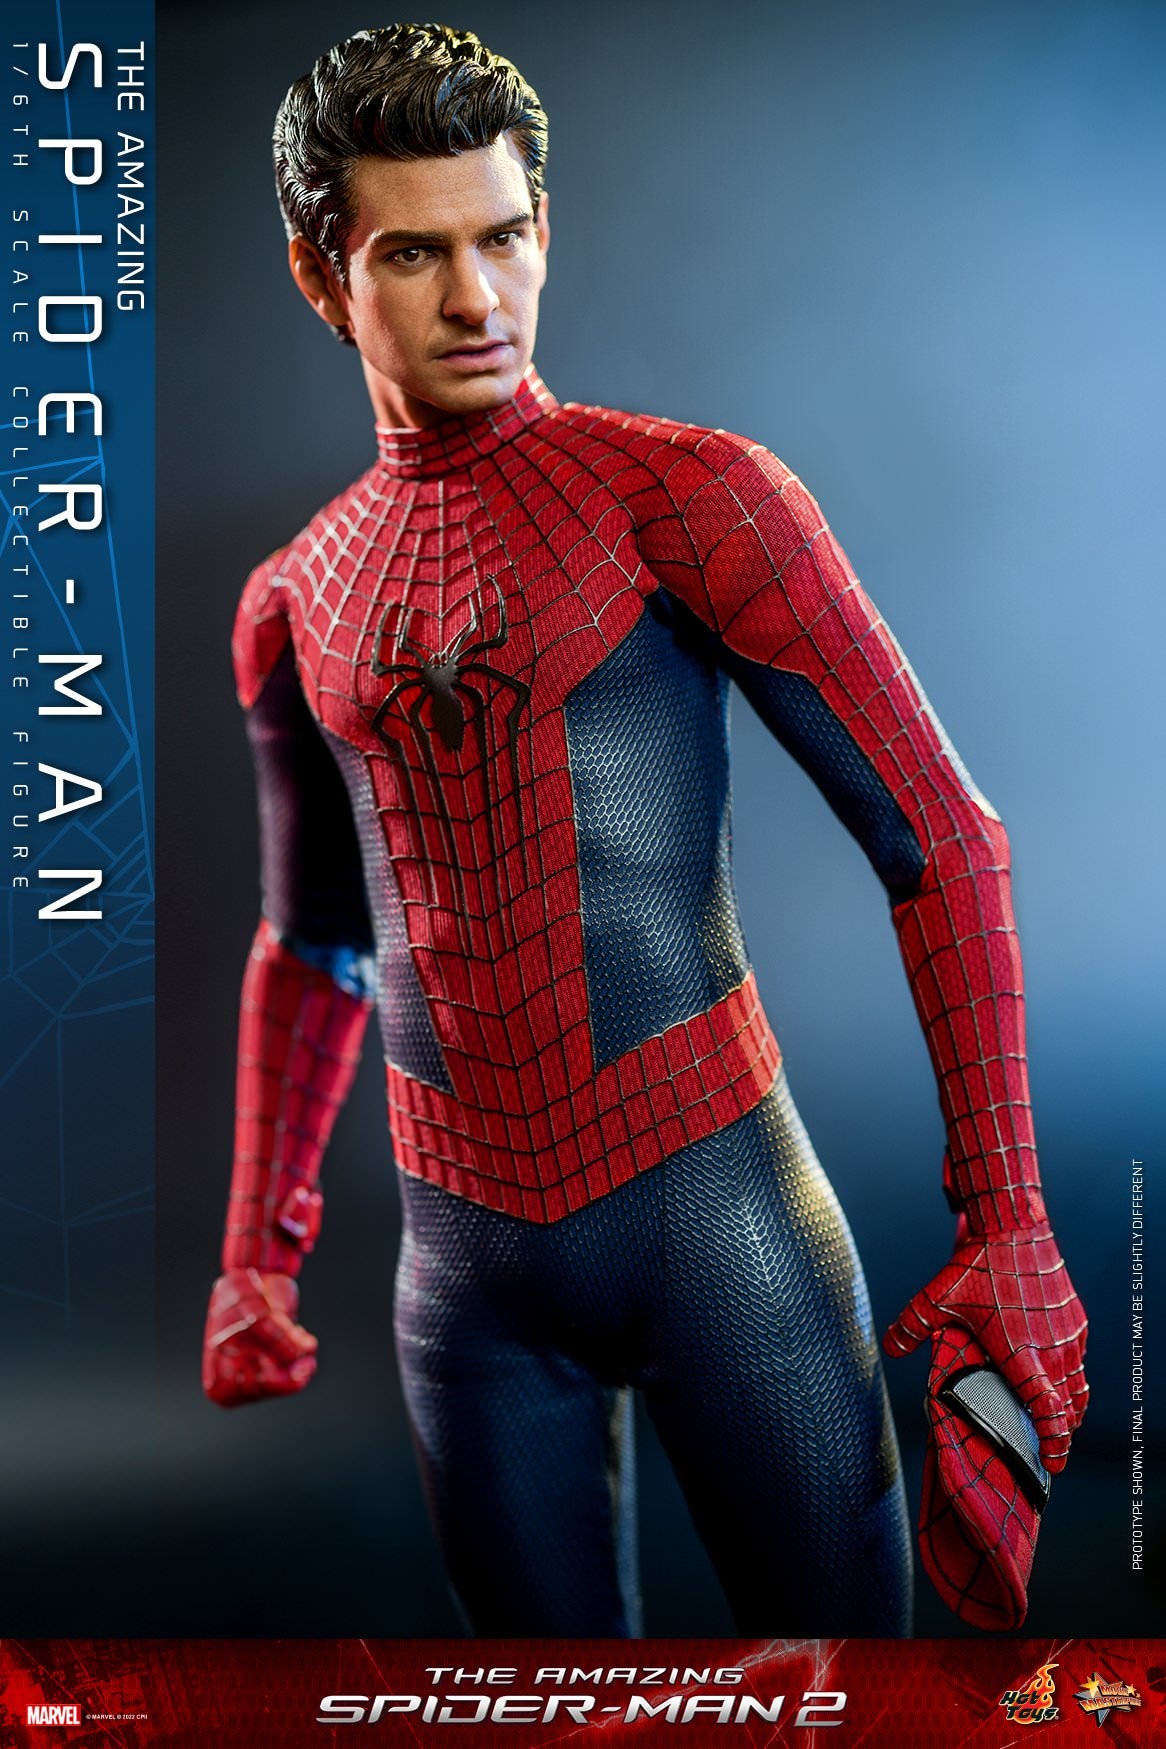 The Amazing Spider-Man: Andrew Garfield: The Amazing Spider-Man 2: Marvel